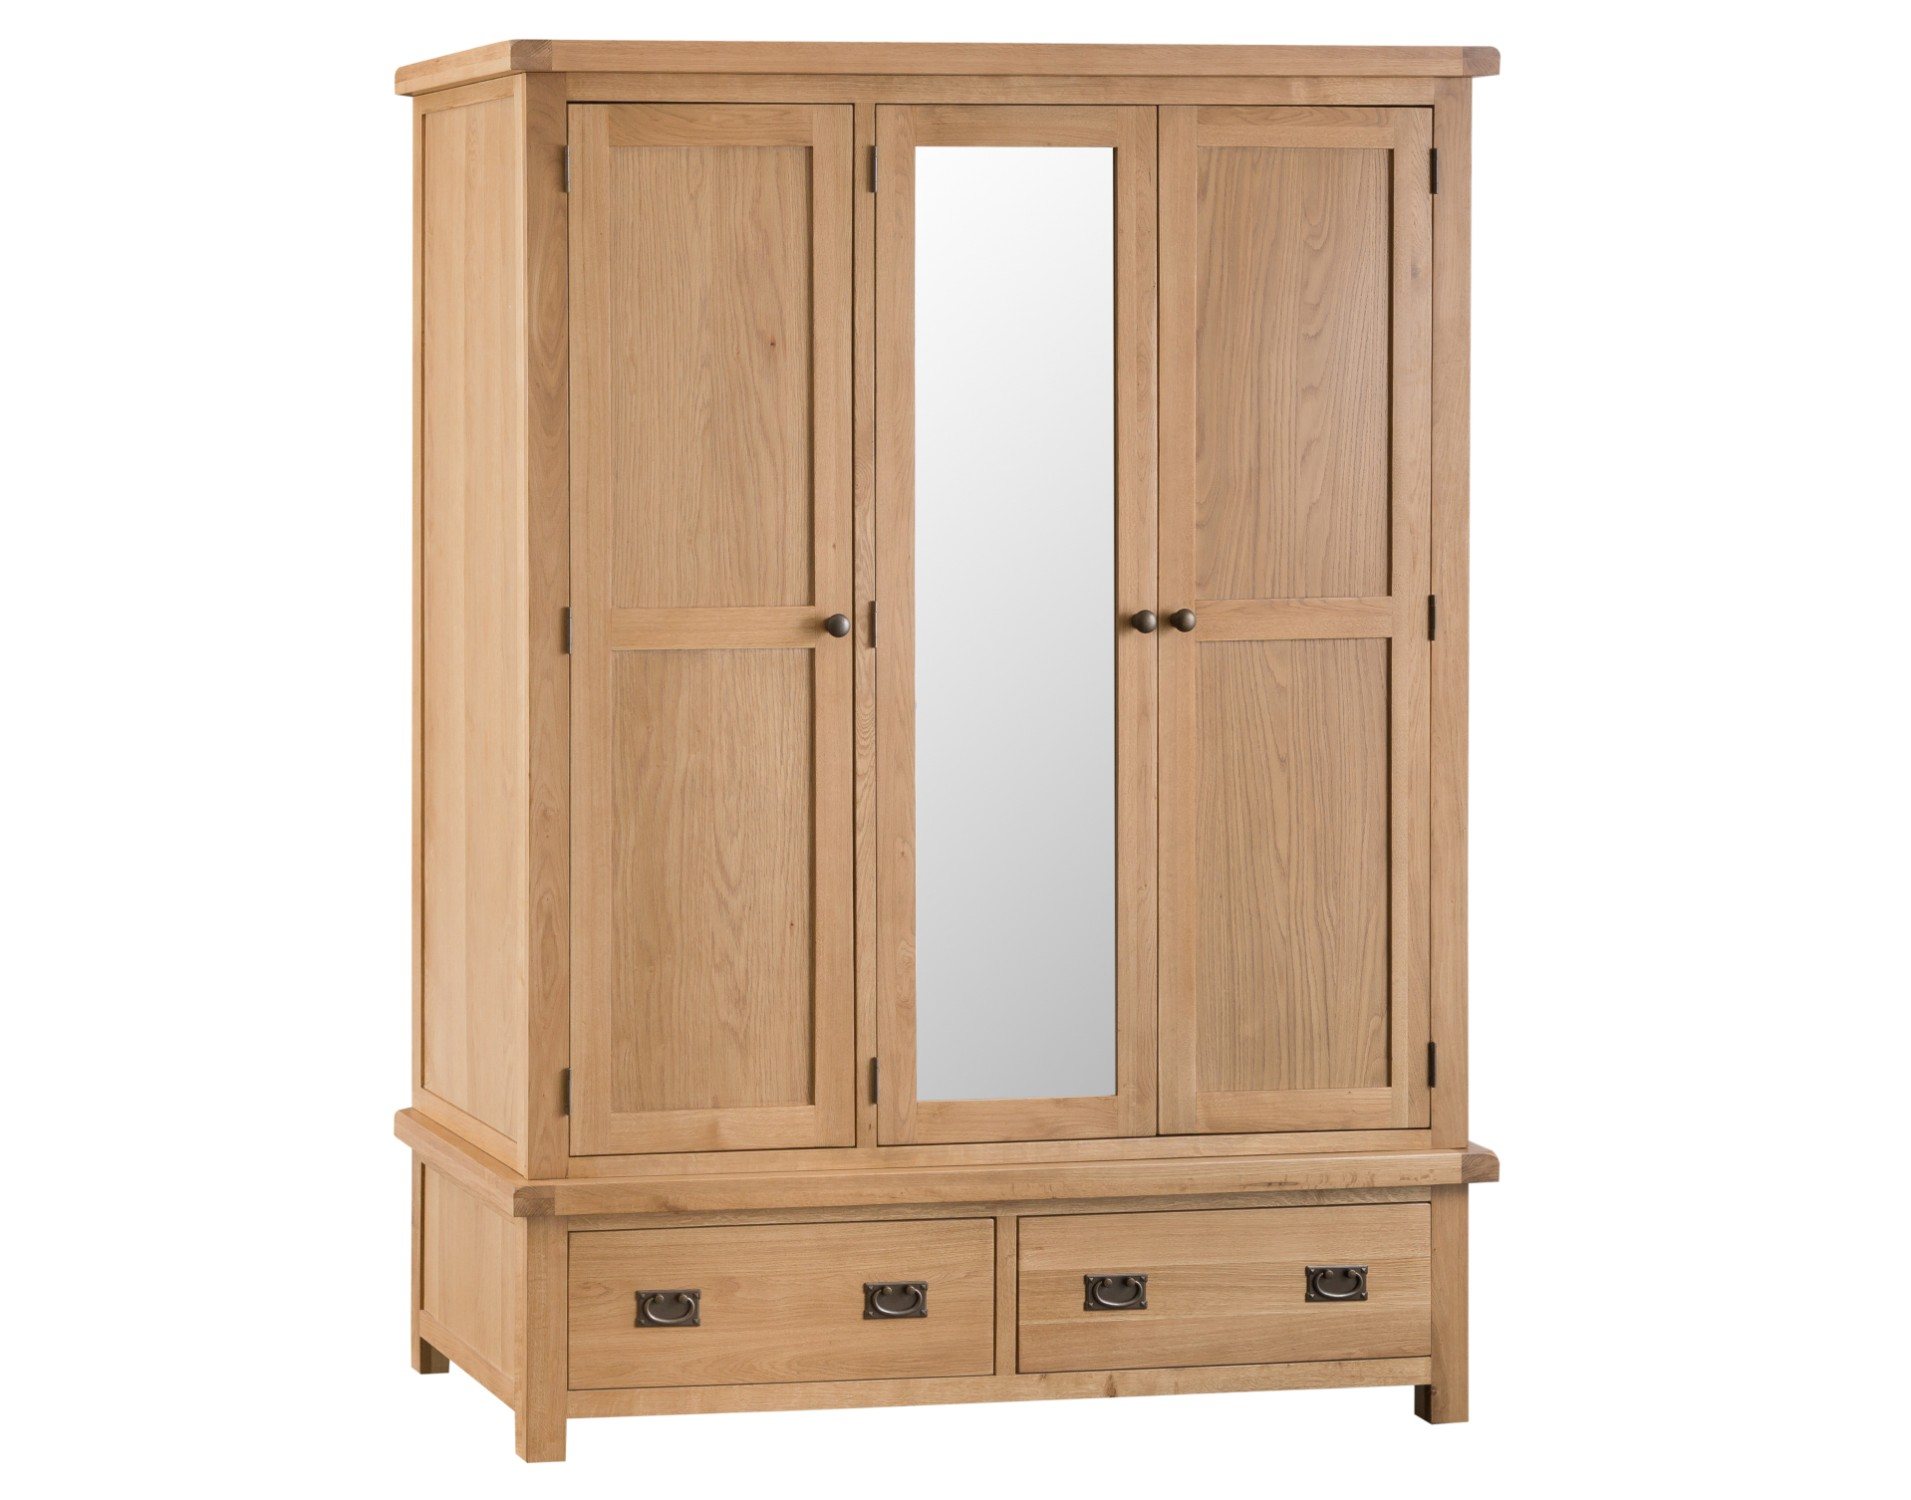 Light Rustic Oak 3 Door Wardrobe With, Light Wood Wardrobe With Mirror